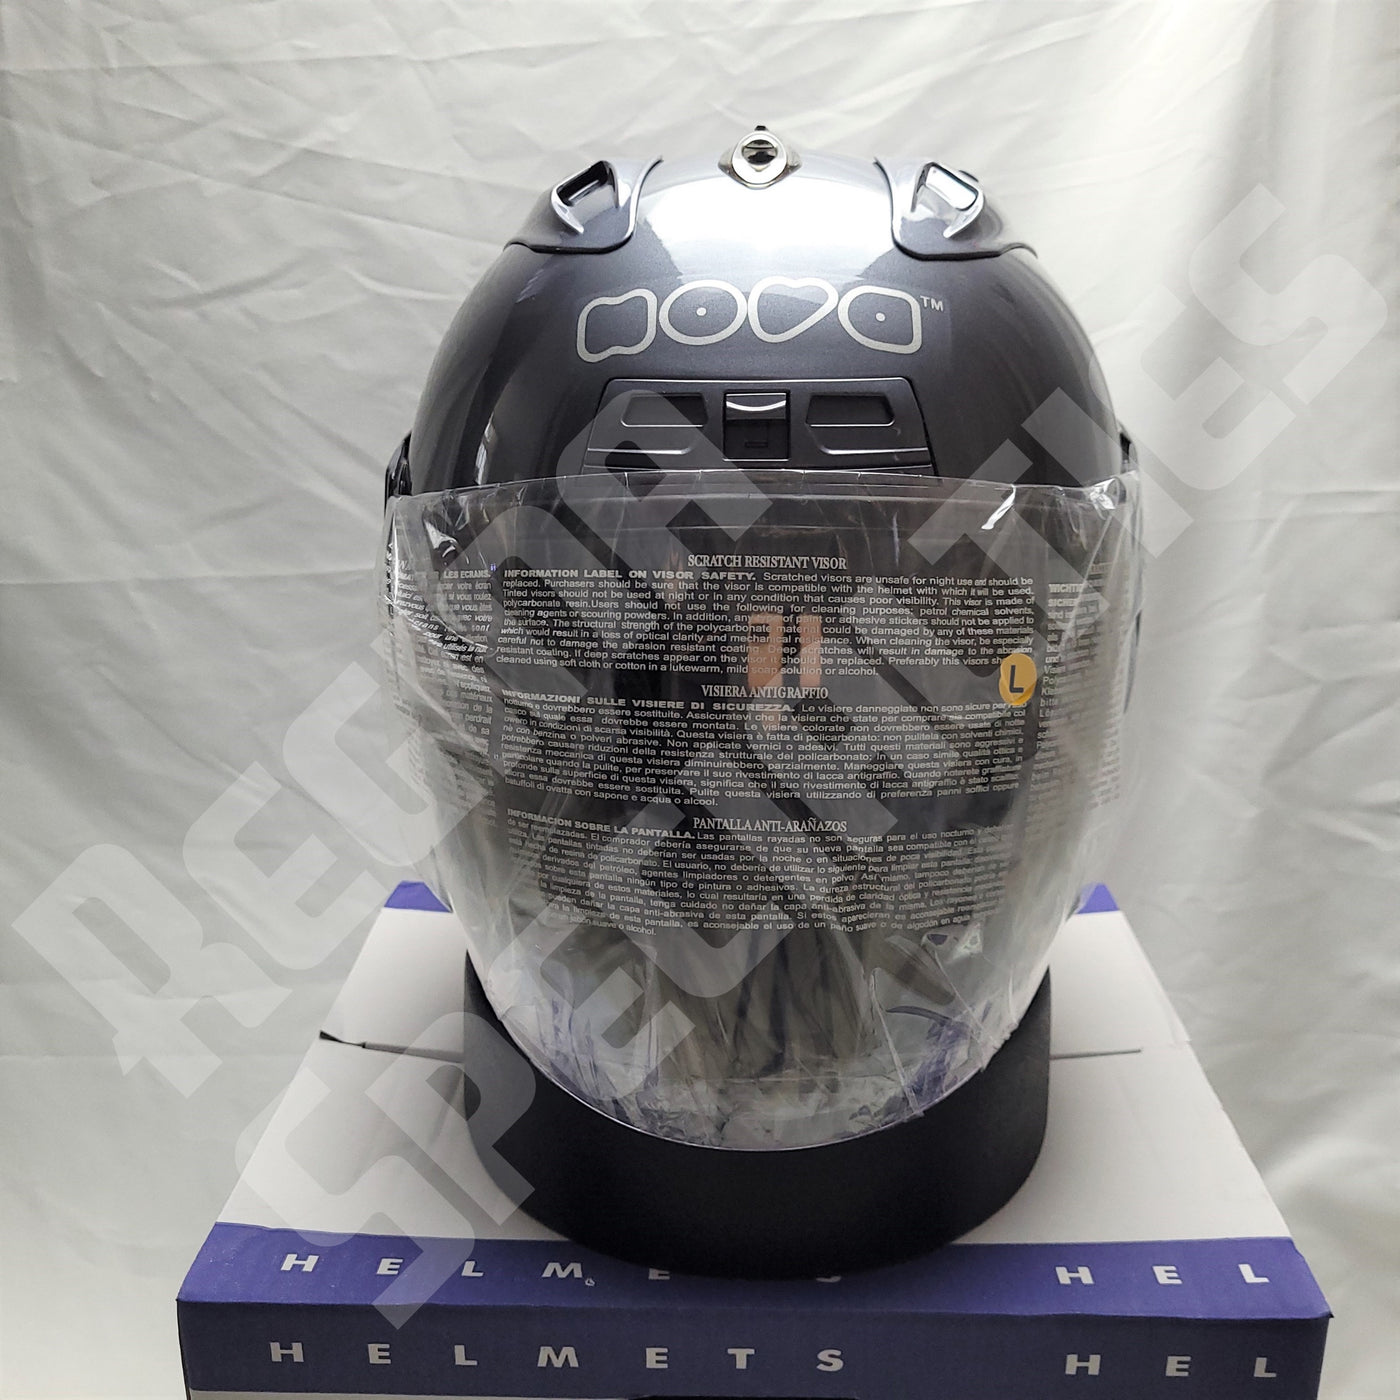 NOVA 606W Gloss Titanium Helmet